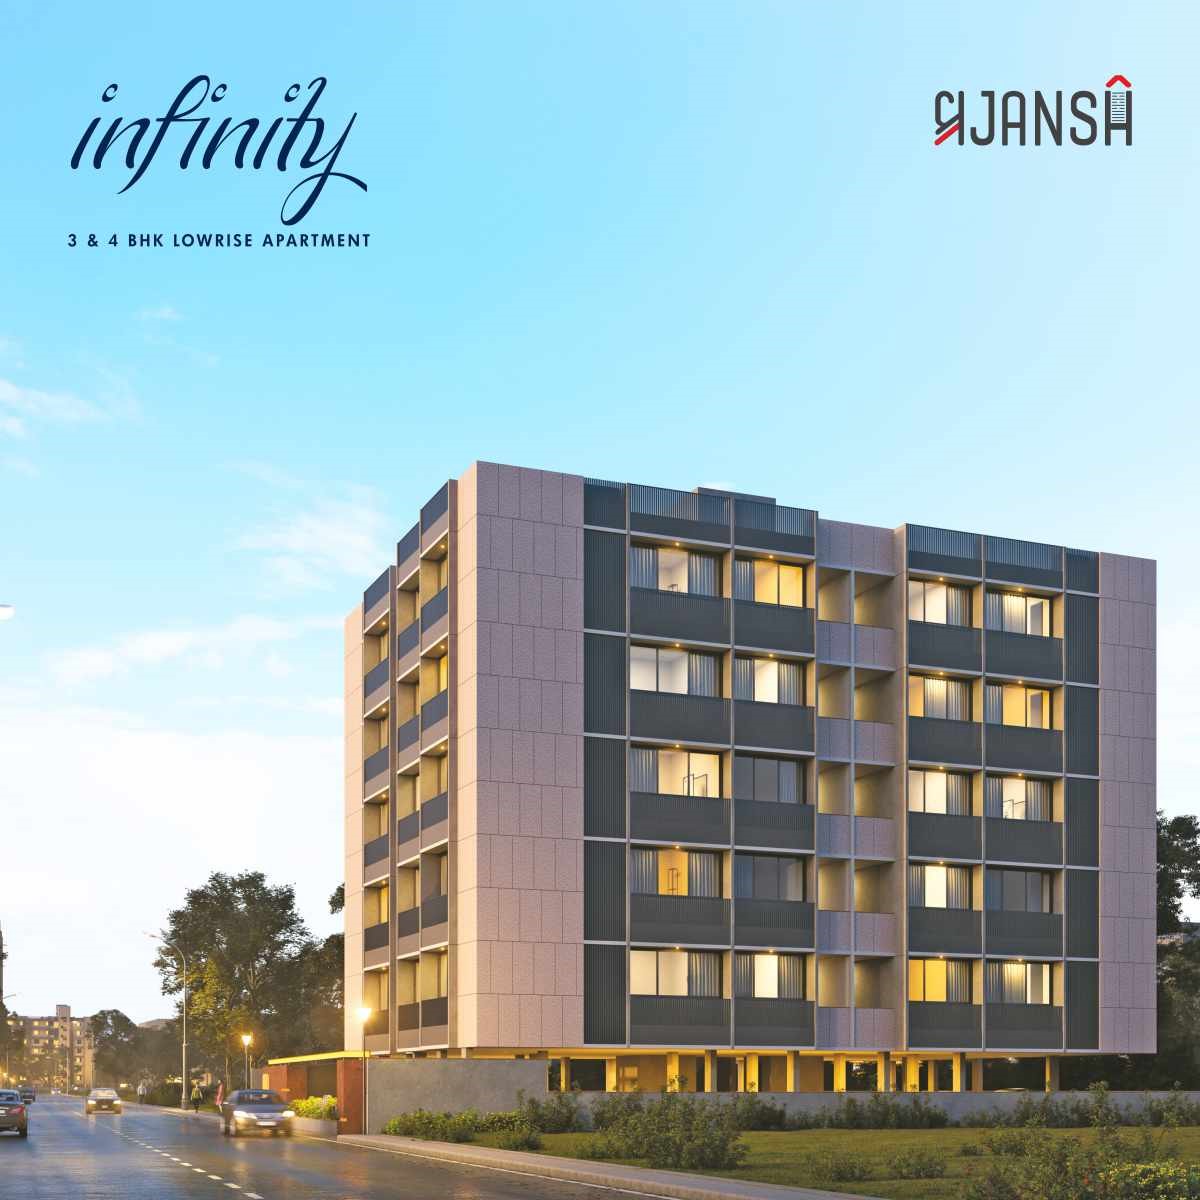 Vrajansh Infinity: Building a Smarter Space in Ahmedabad